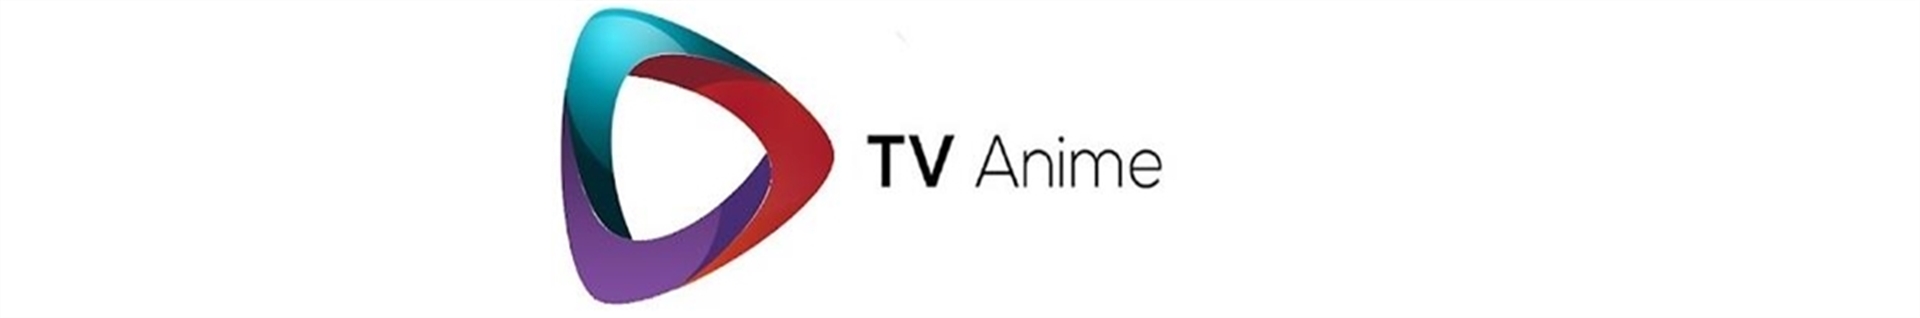 TV.anime